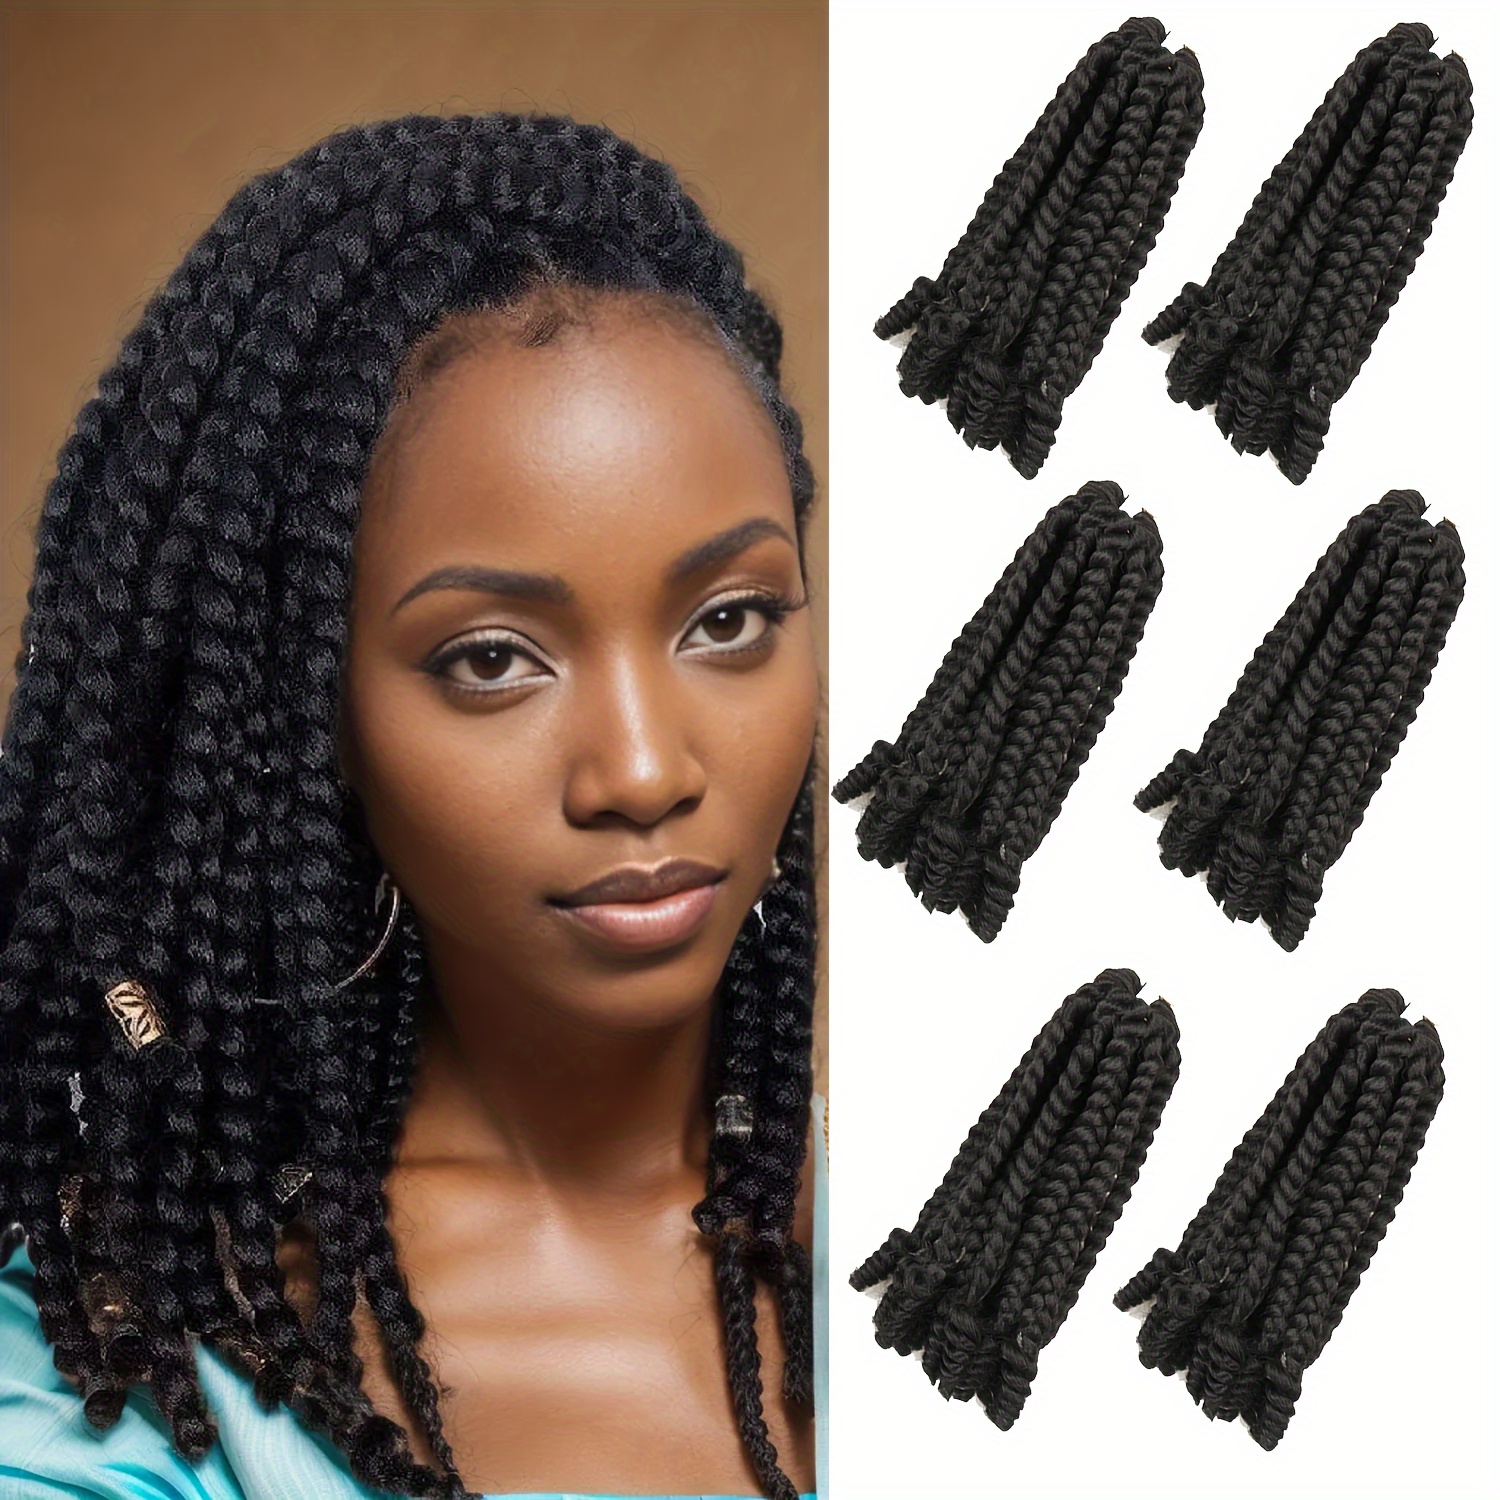 3Packs Crochet Box Braids Curly Ends 10/14 Inch Crochet Hair for Black Women